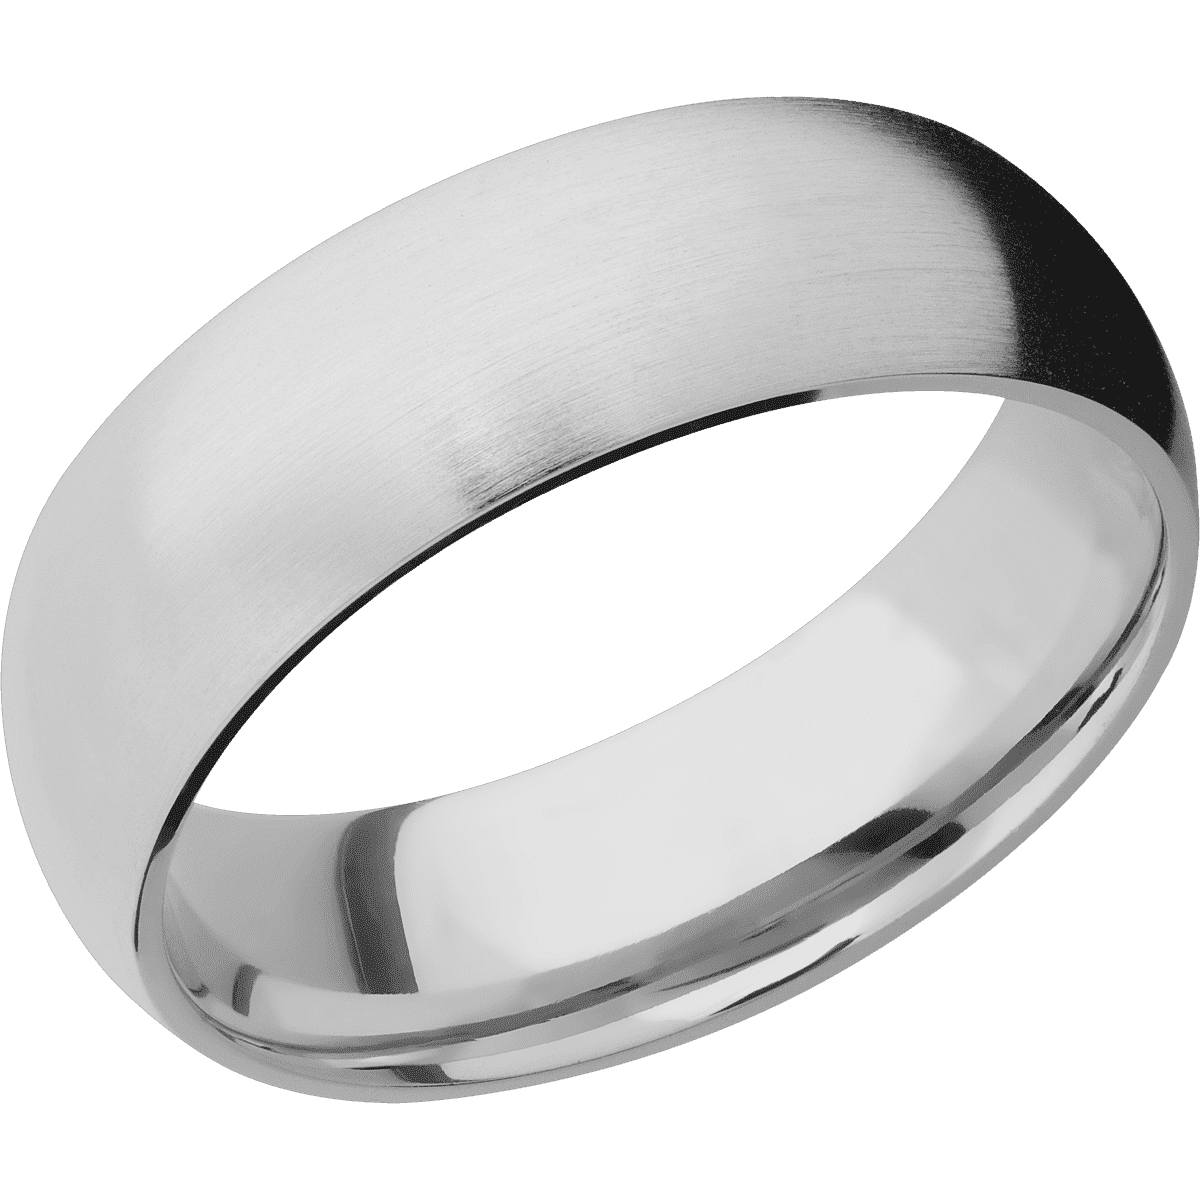 lashbrook mens wedding ring